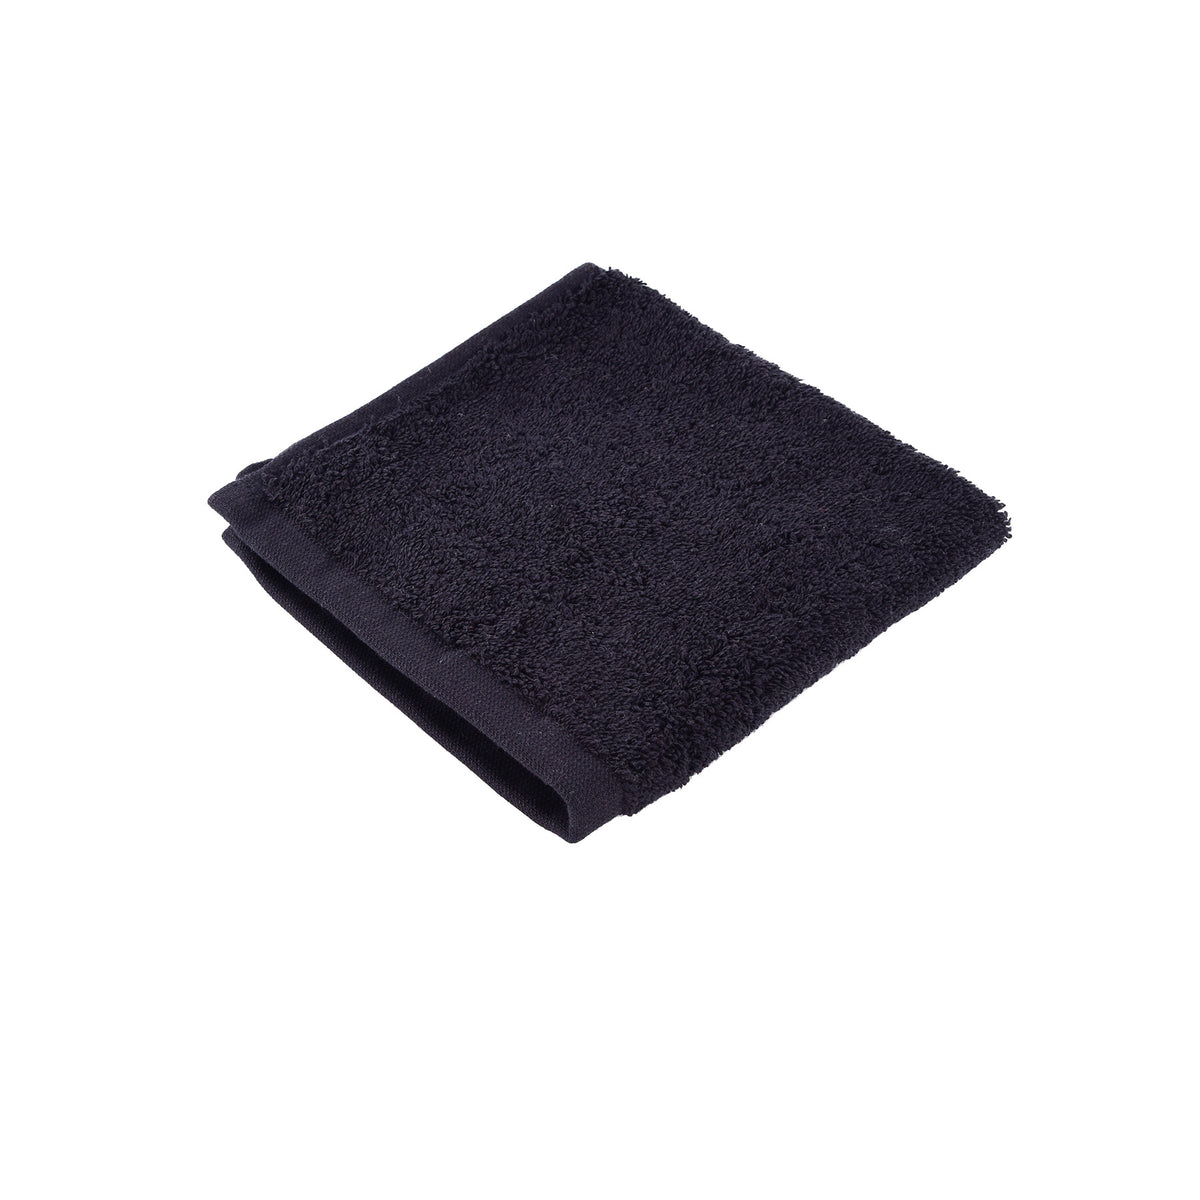 Hand towel - BlackSize: 33x33cm.